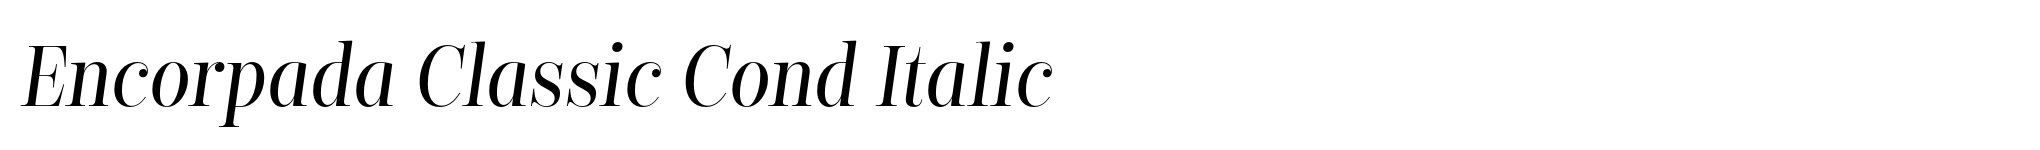 Encorpada Classic Cond Italic image